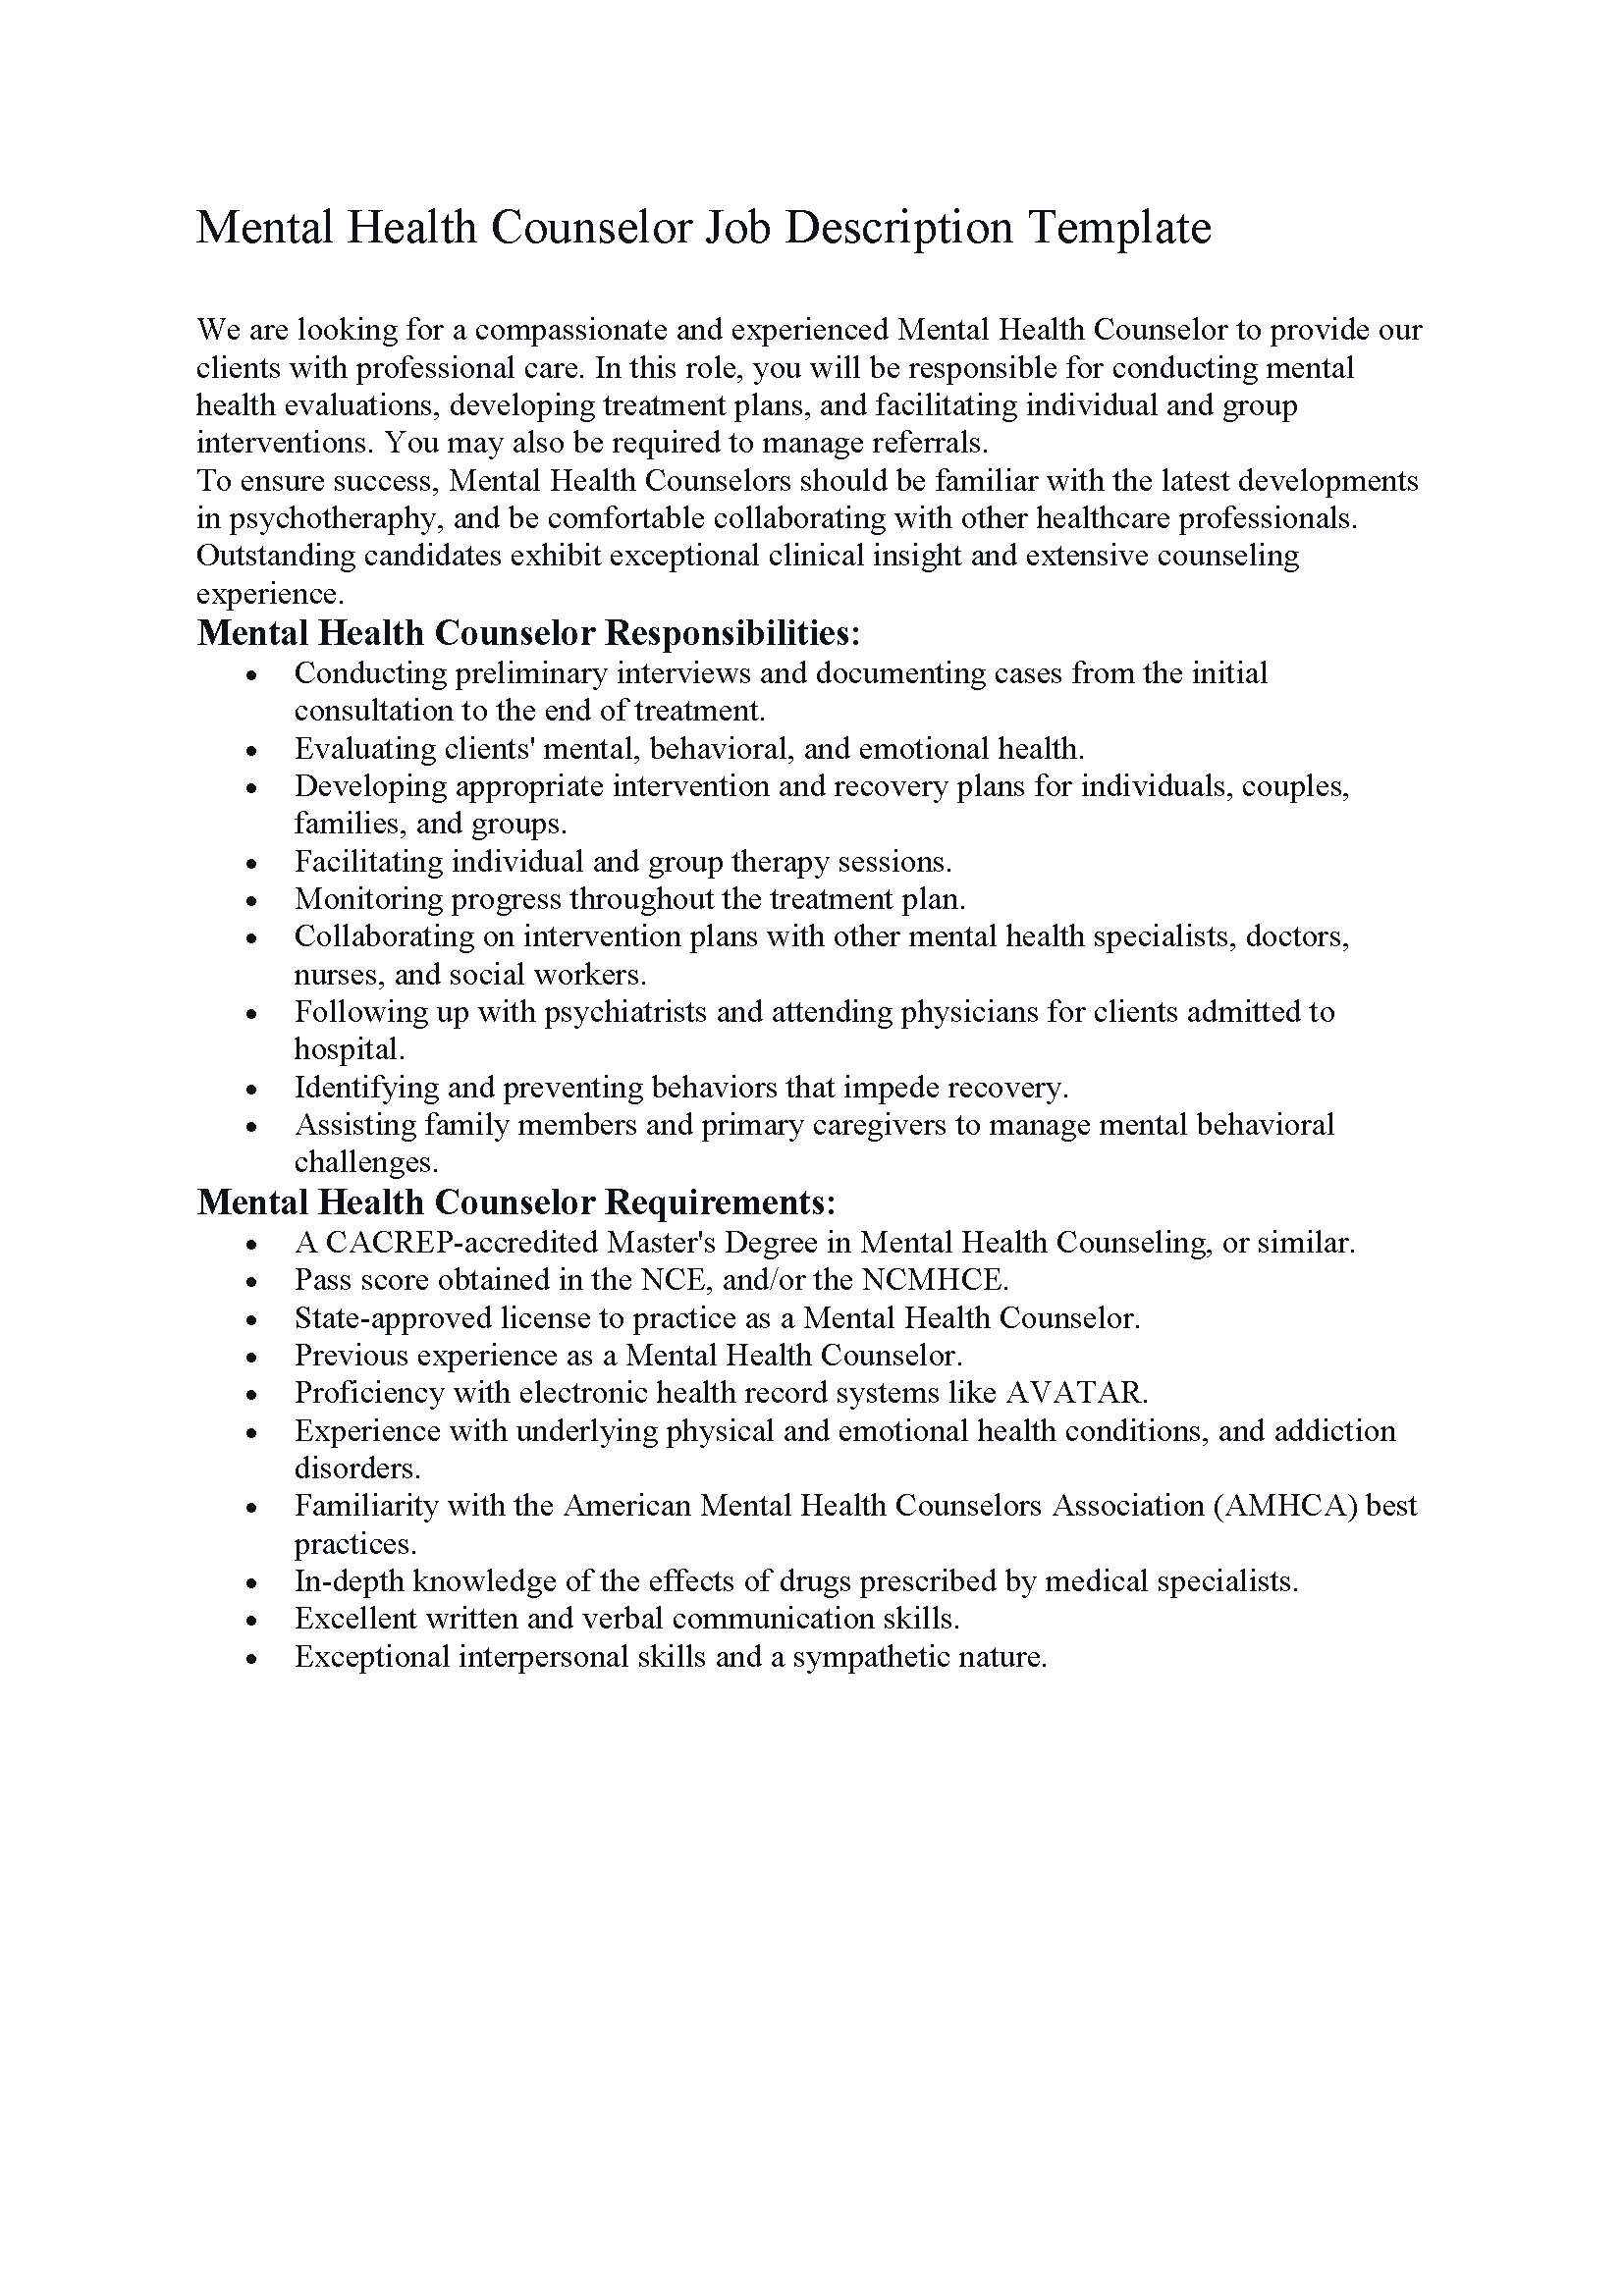 Mental Health Counselor Job Description Template